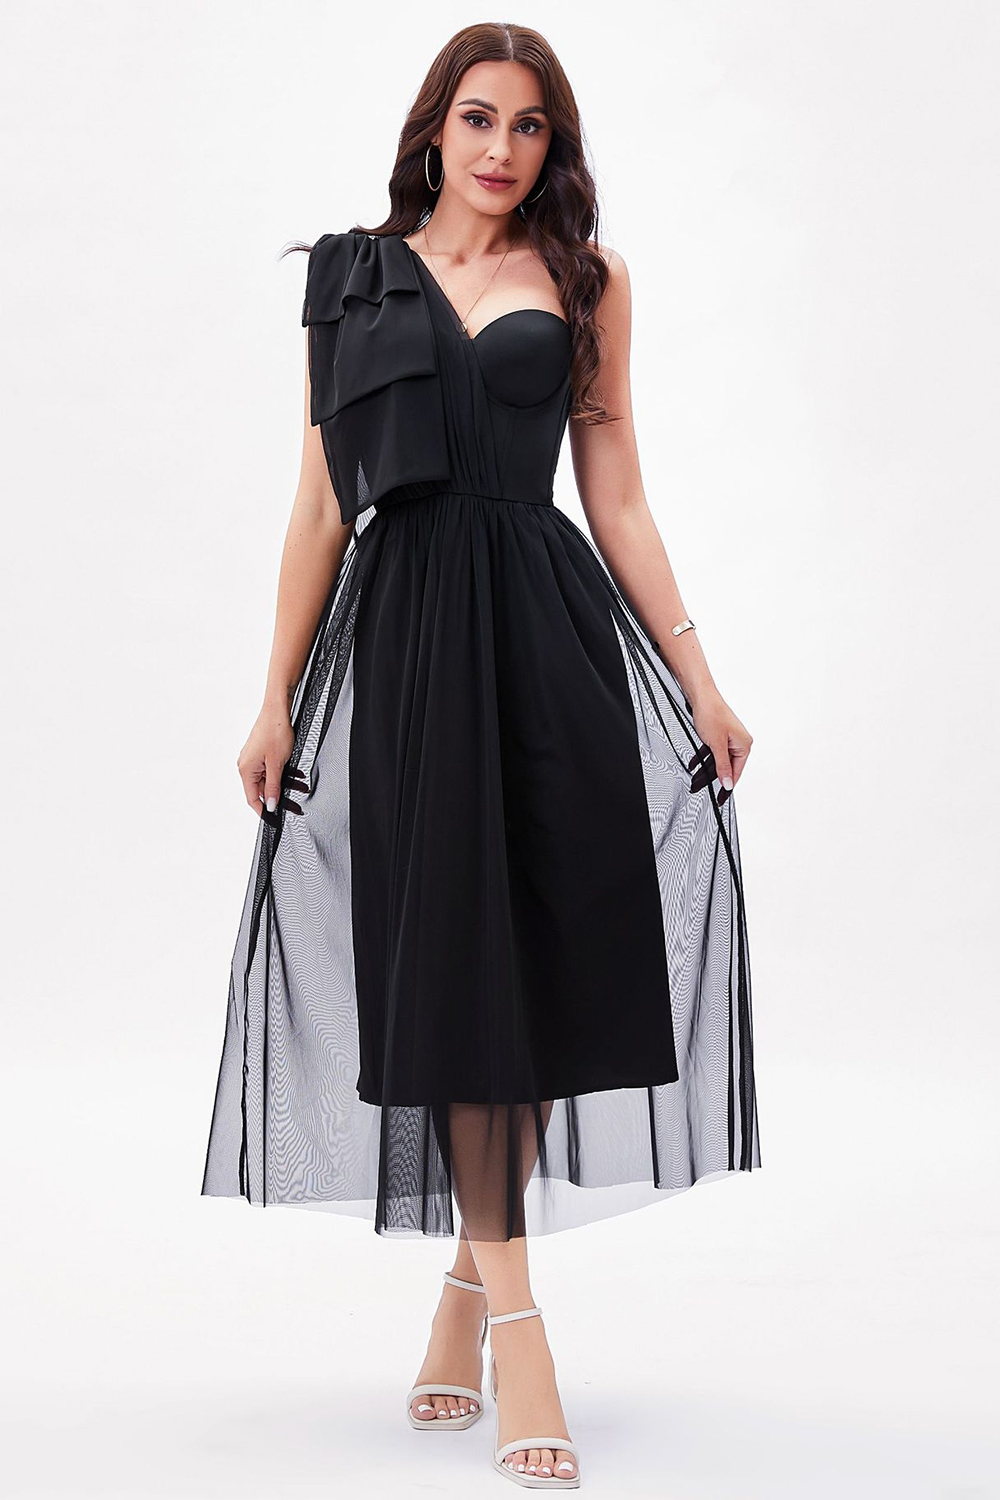 Elegant Black A-Line One Shoulder Corset Party Dress